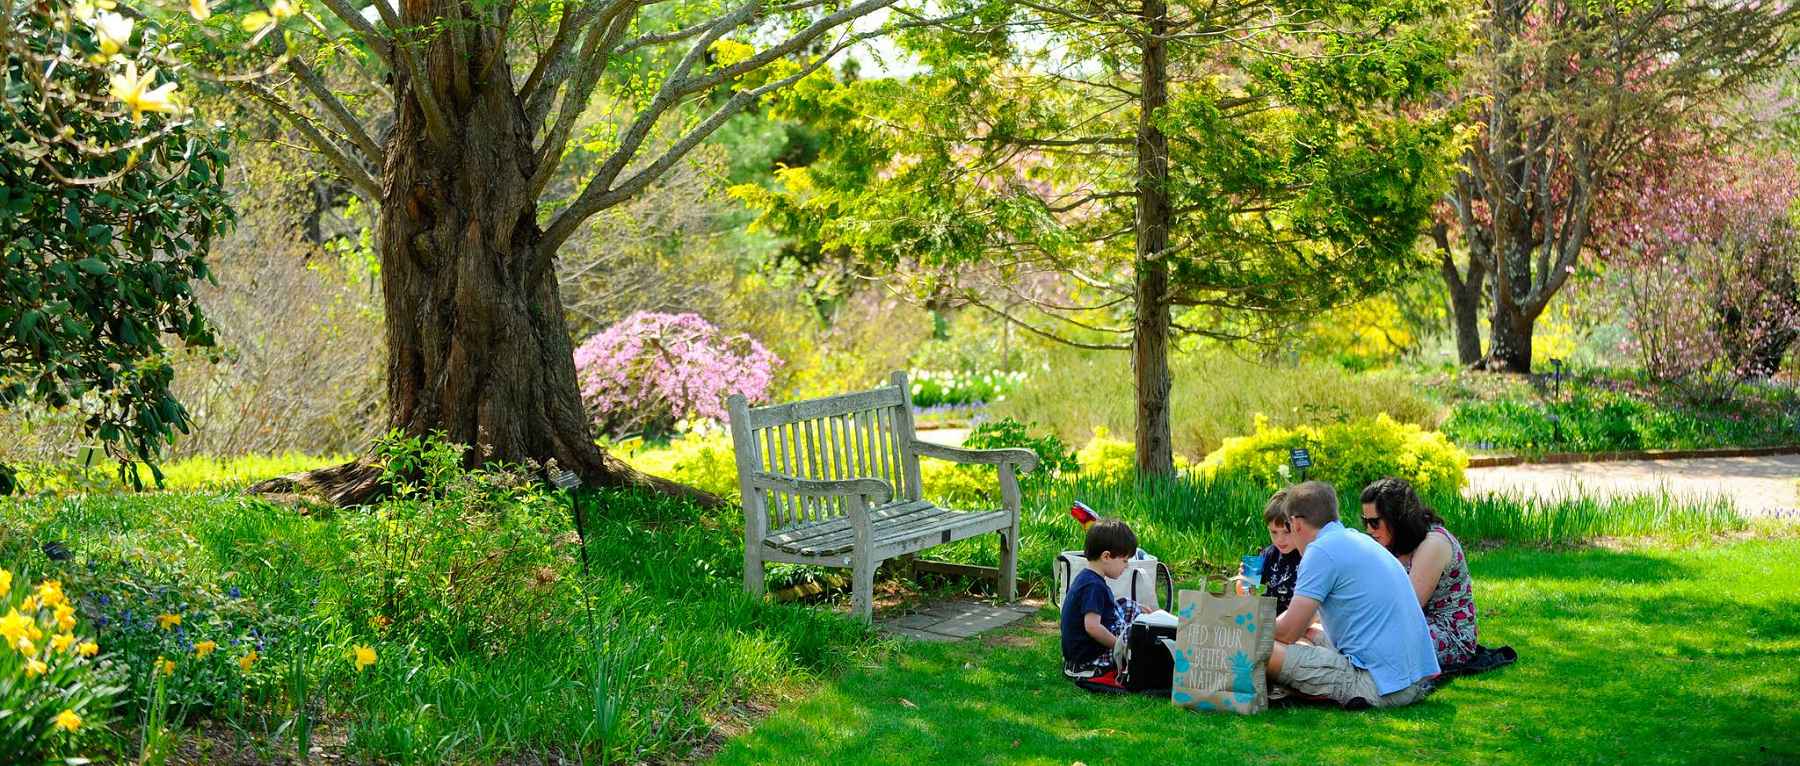 Spring Picnic at New England Botanic Garden at Tower Hill - Boylston, MA